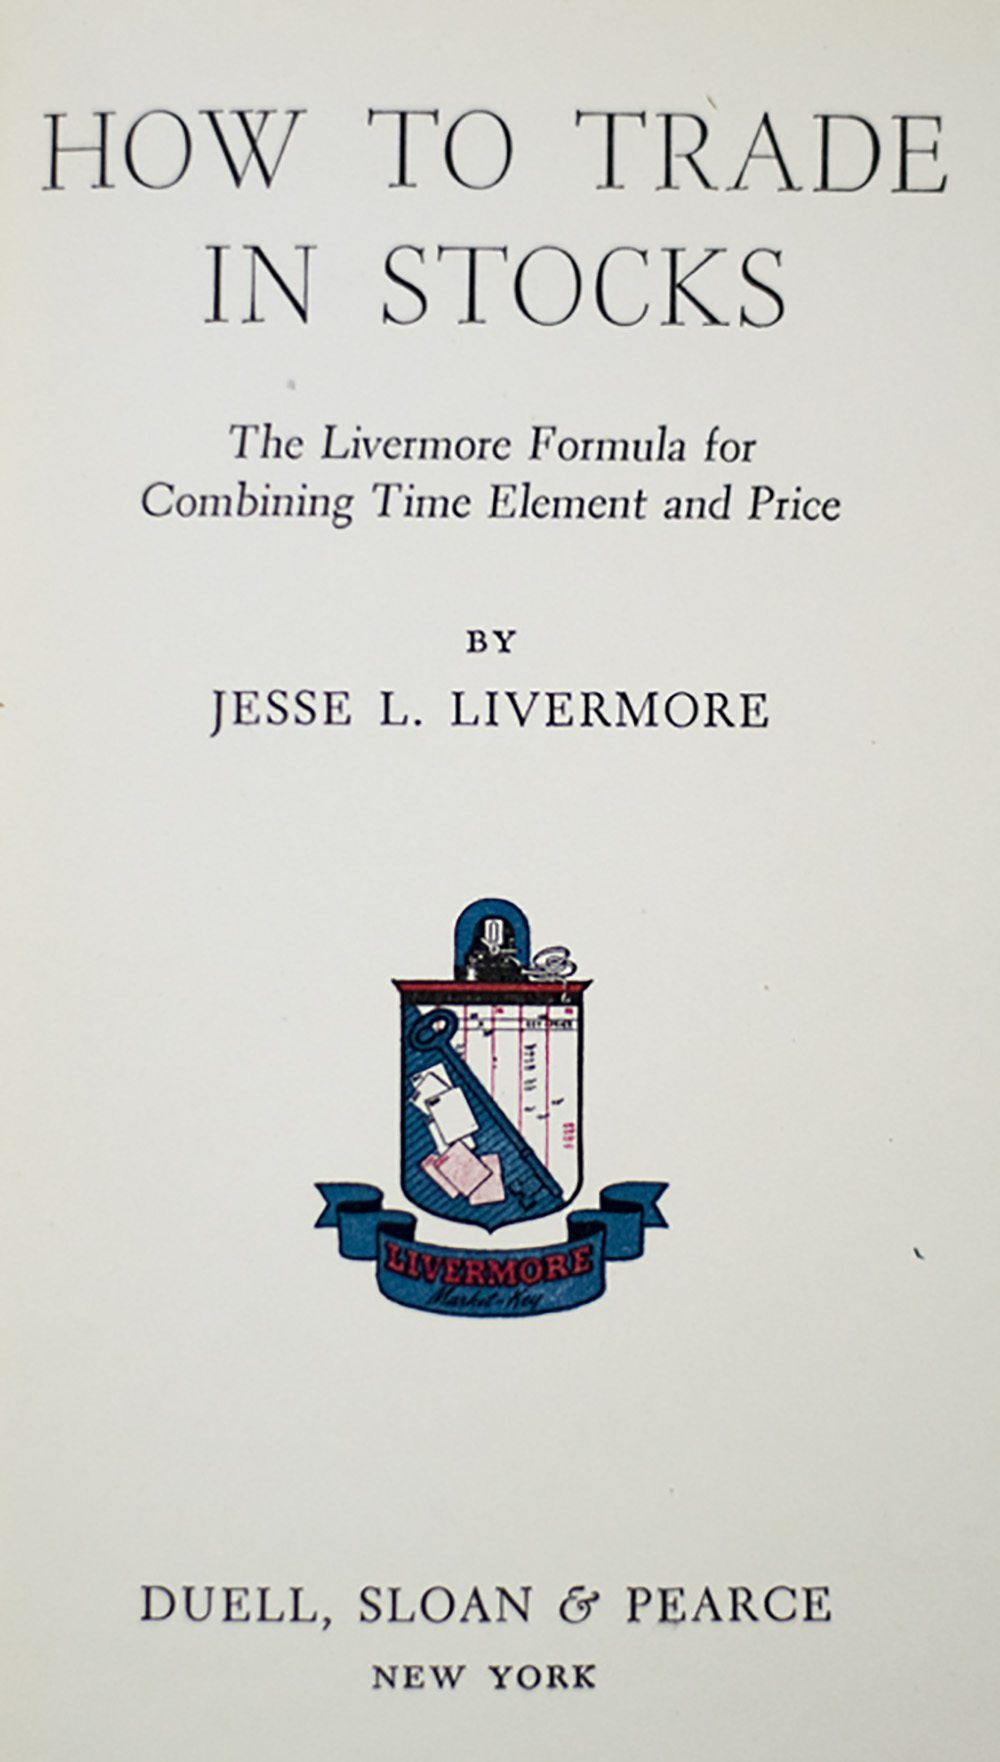 jesse livermore how to trade stocks